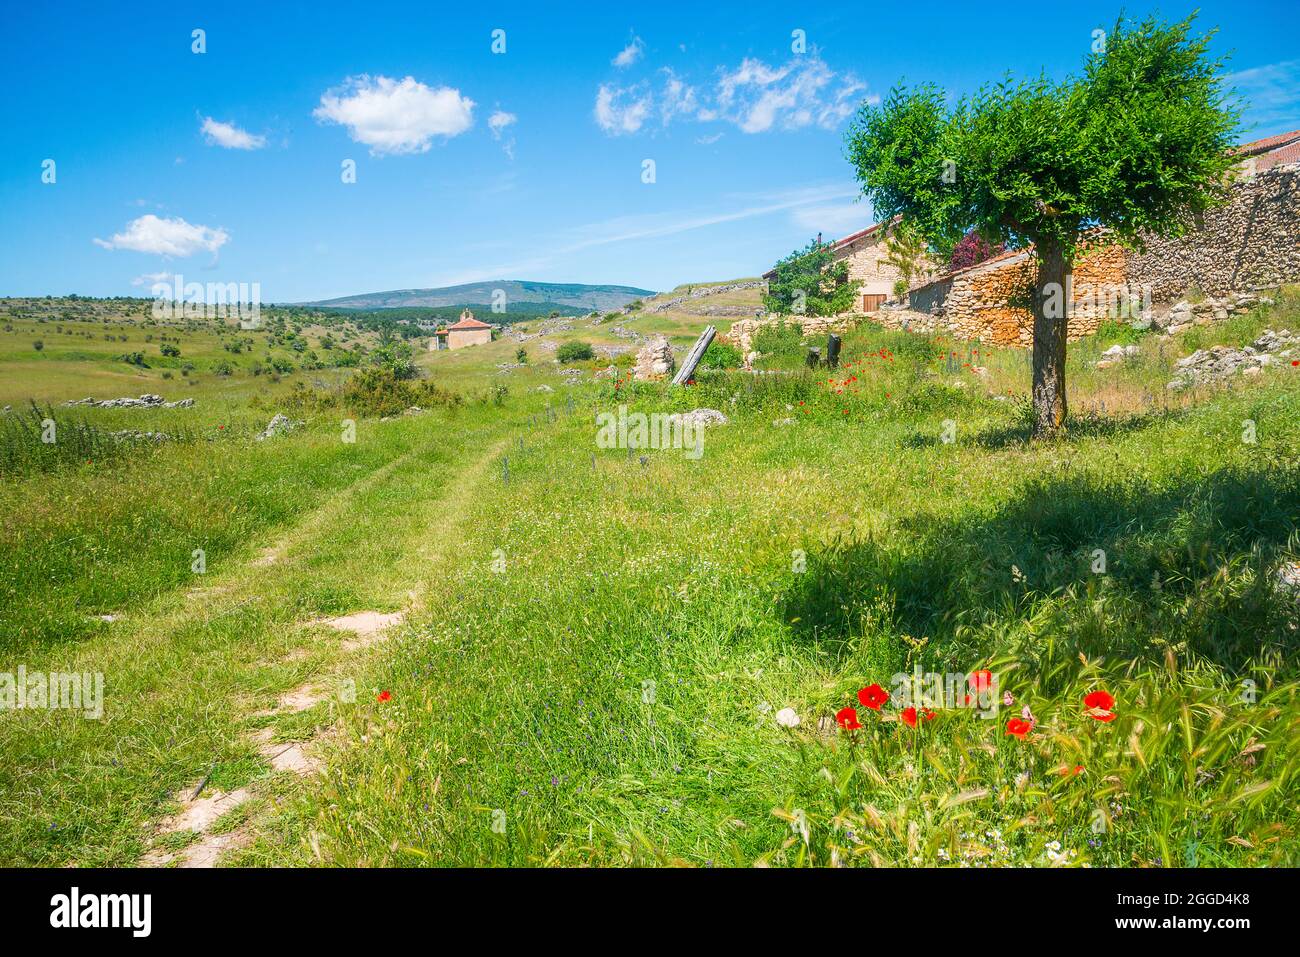 Ruins and landscape. Villacadima, Guadalajara province, Castilla La Mancha, Spain. Stock Photo